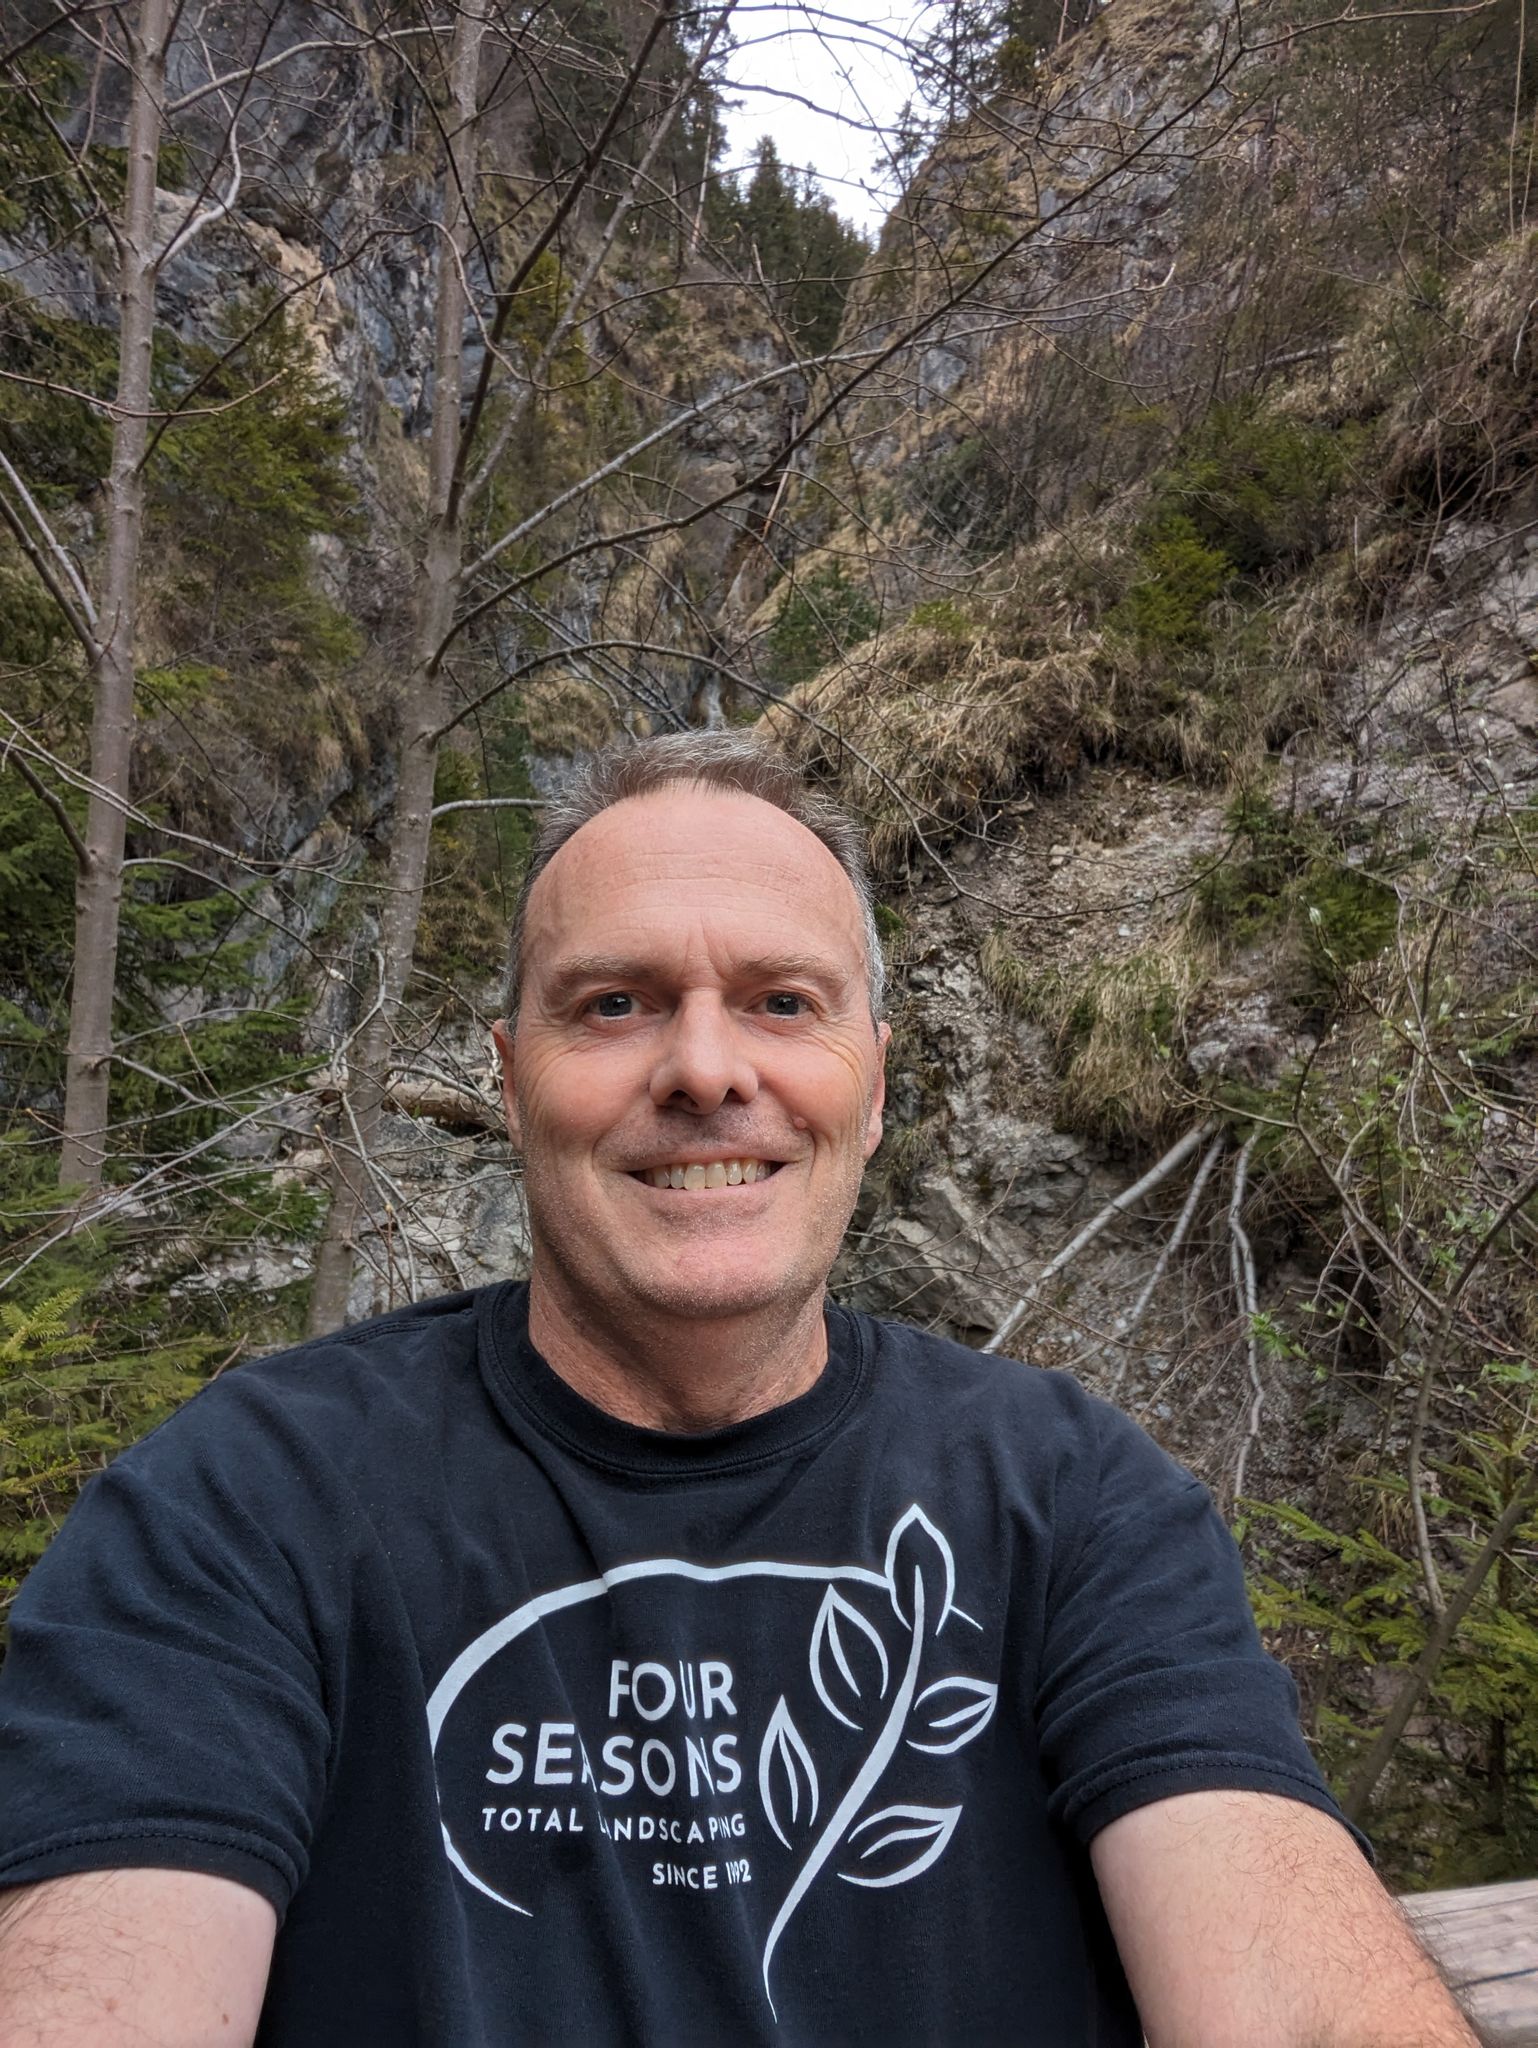  Garmisch-Partenkirchen, 5 Apr 2024  Quick selfie with my authentic  Four Seasons Total Landscaping  t-shirt at Kesselgraben Wasserfall.